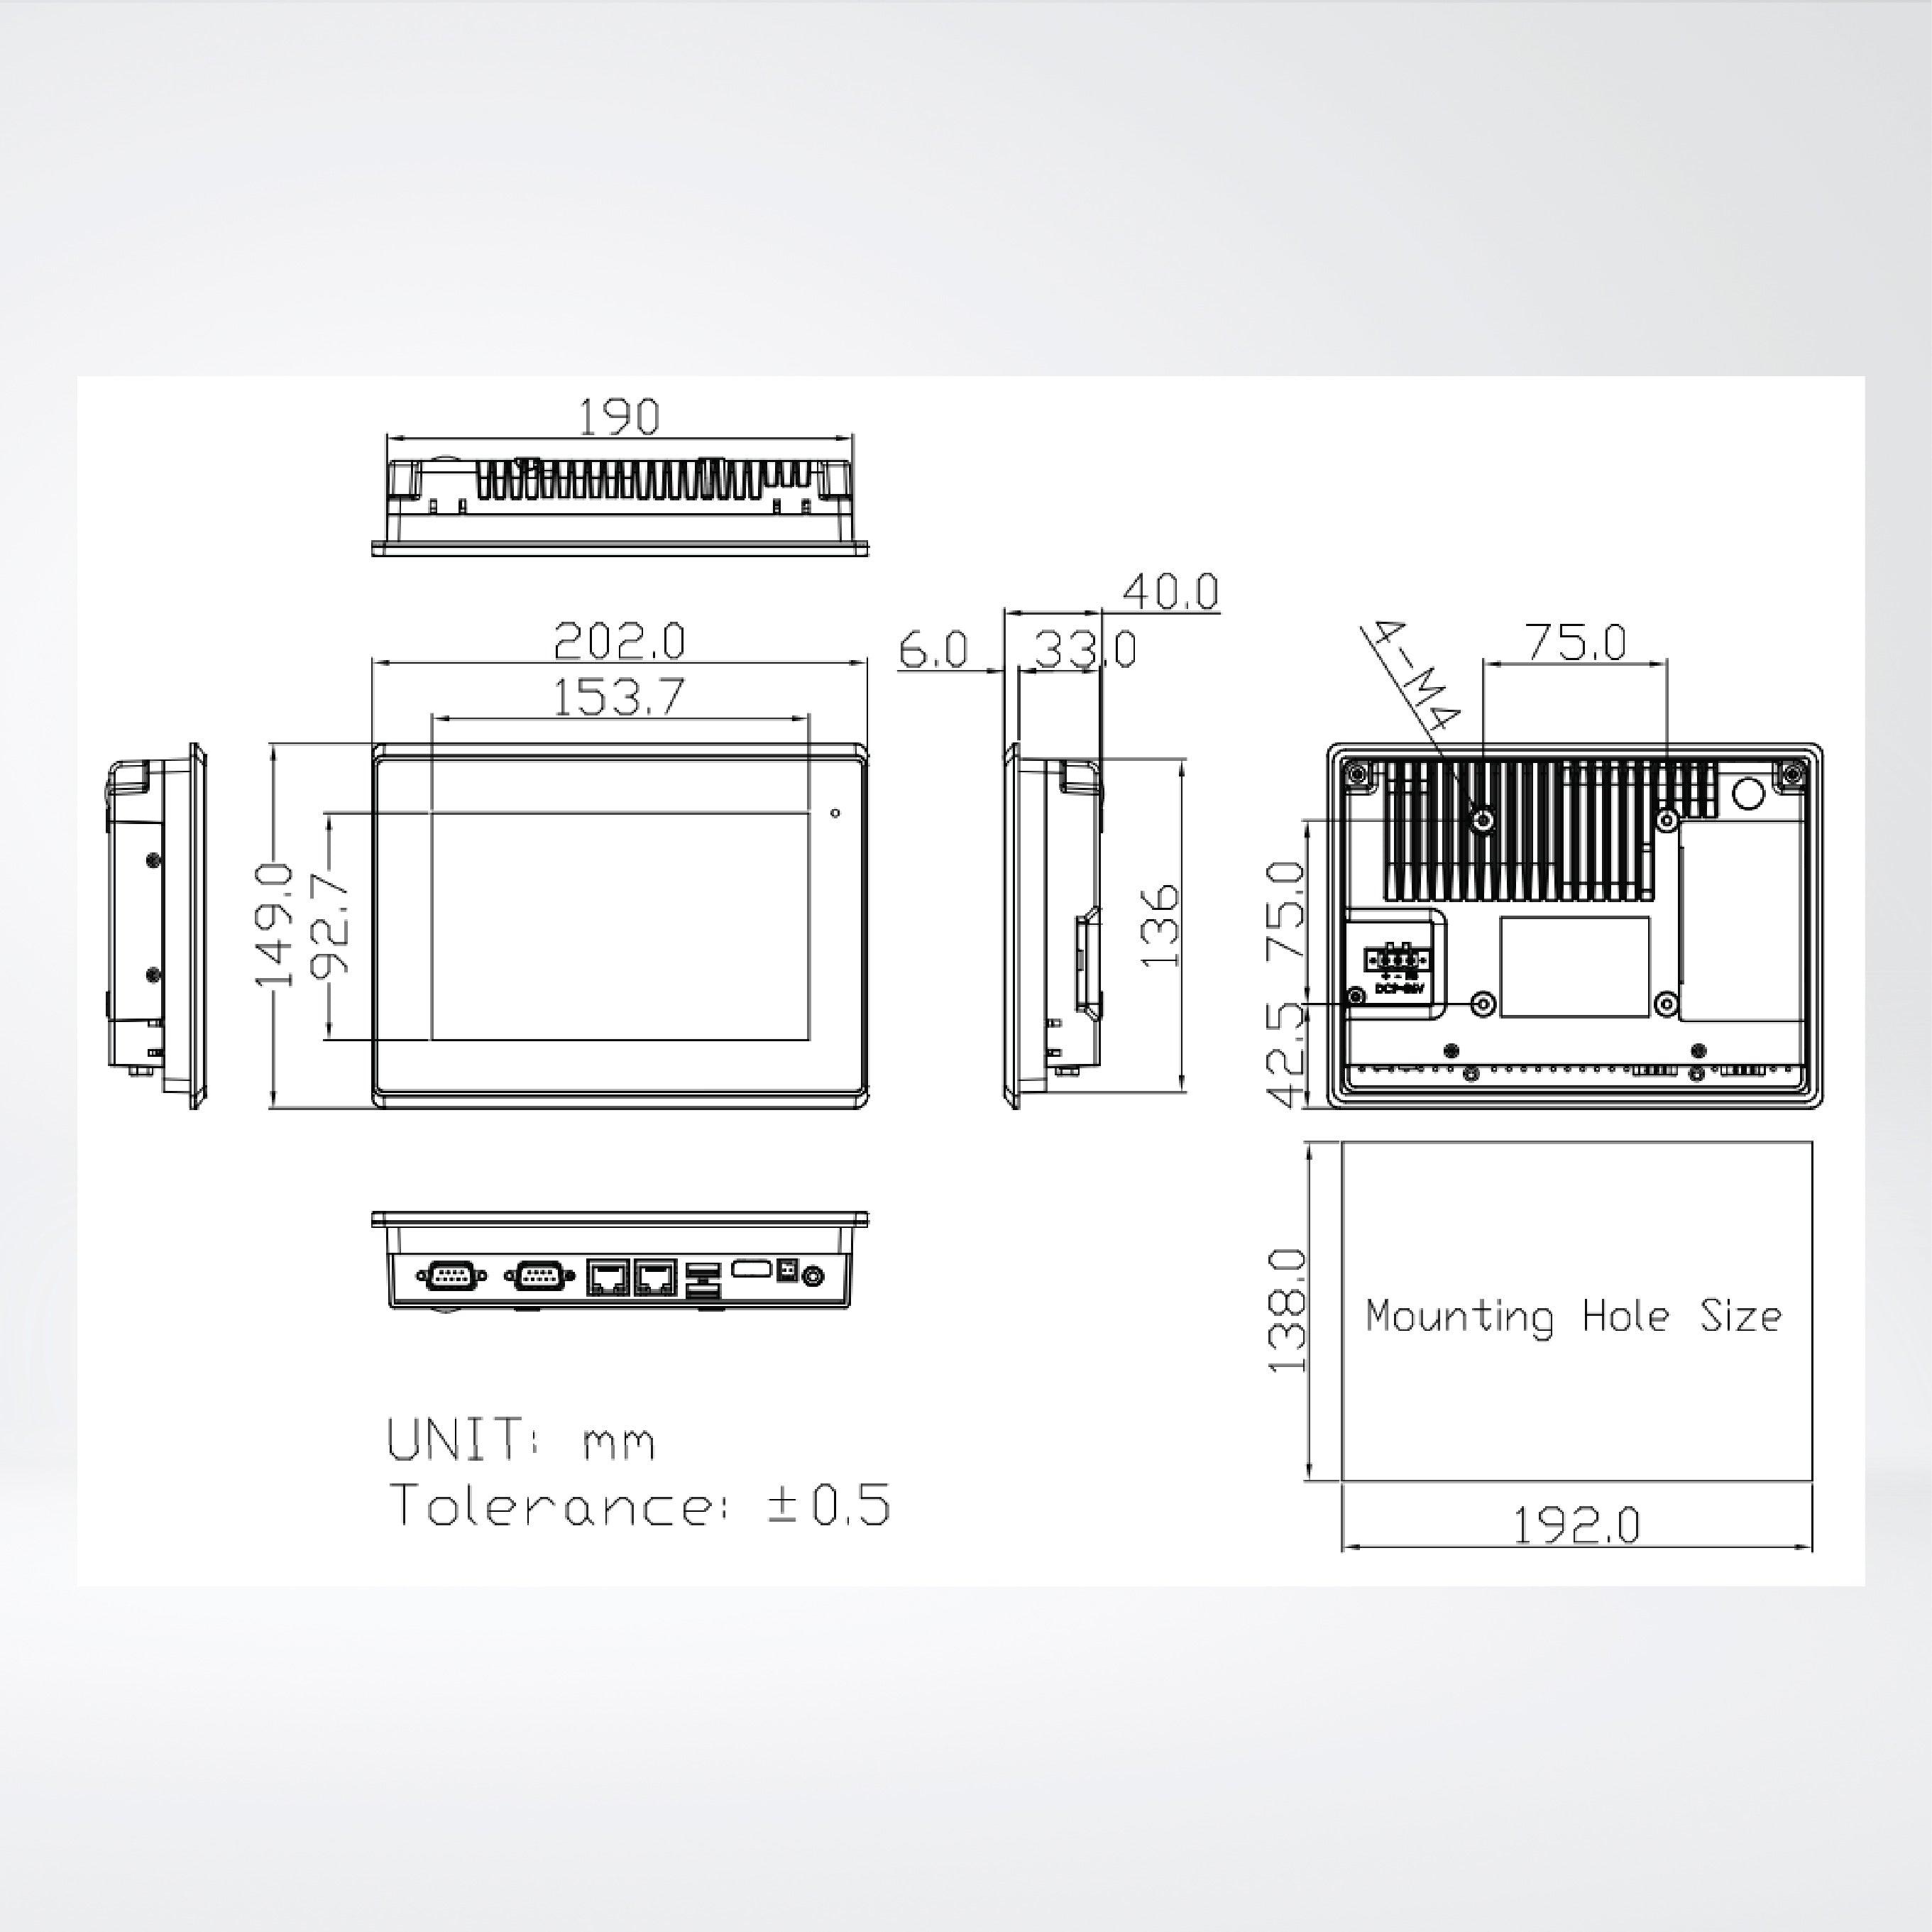 ARCHMI-807PH 7" Intel Celeron N2930/ Atom E3845, Fanless Industrial Compact Size Panel PC - Riverplus